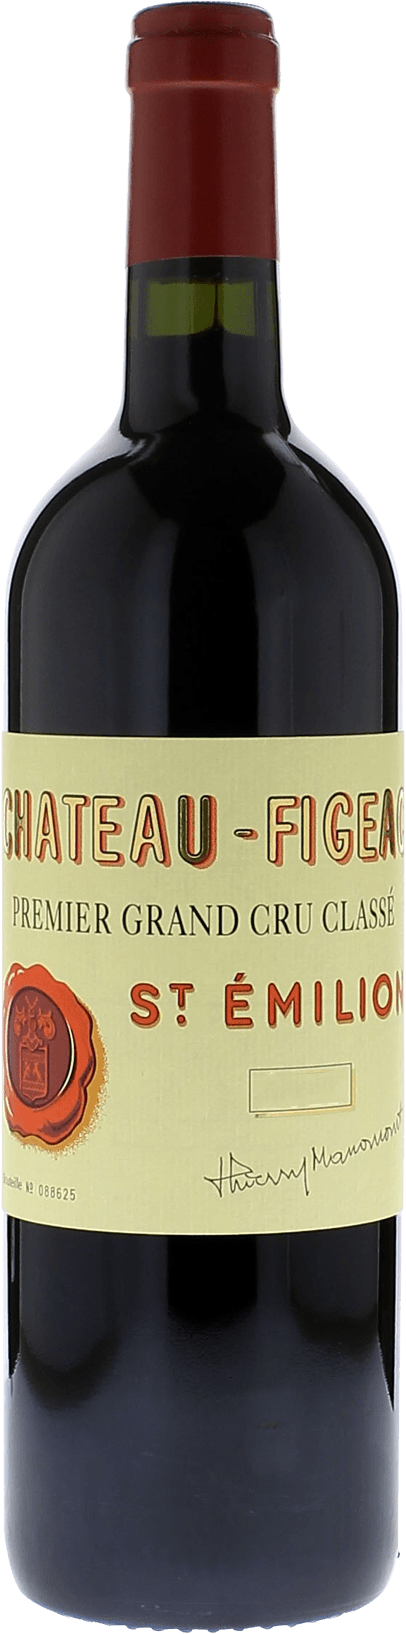 Figeac 2002 1er Grand cru B class Saint-Emilion, Bordeaux rouge